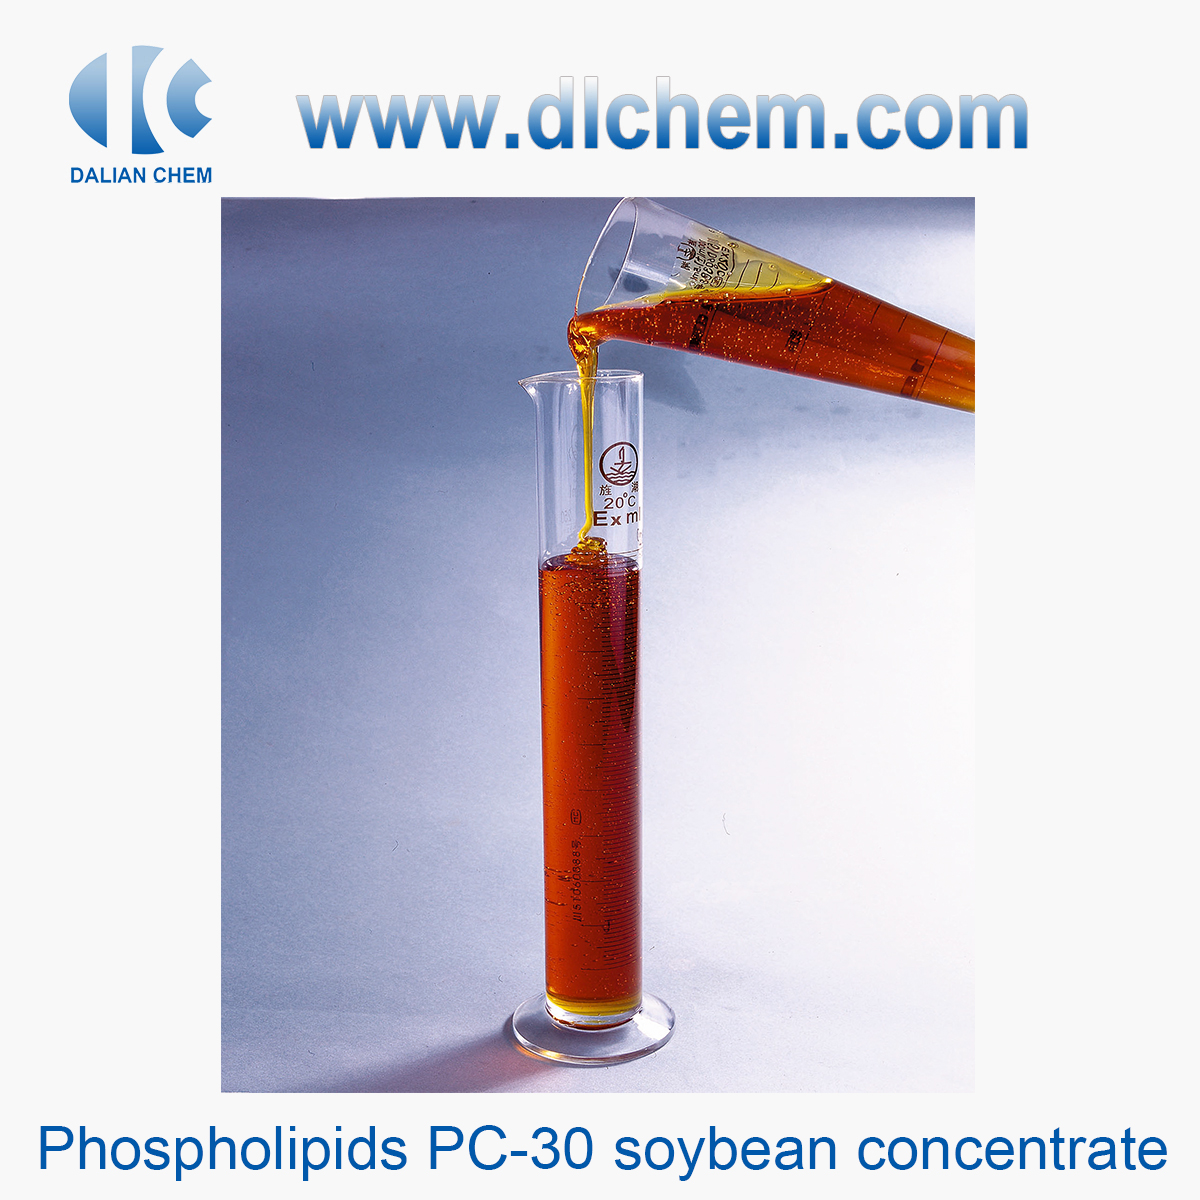 Phospholipids PC-30 soybean concentrate